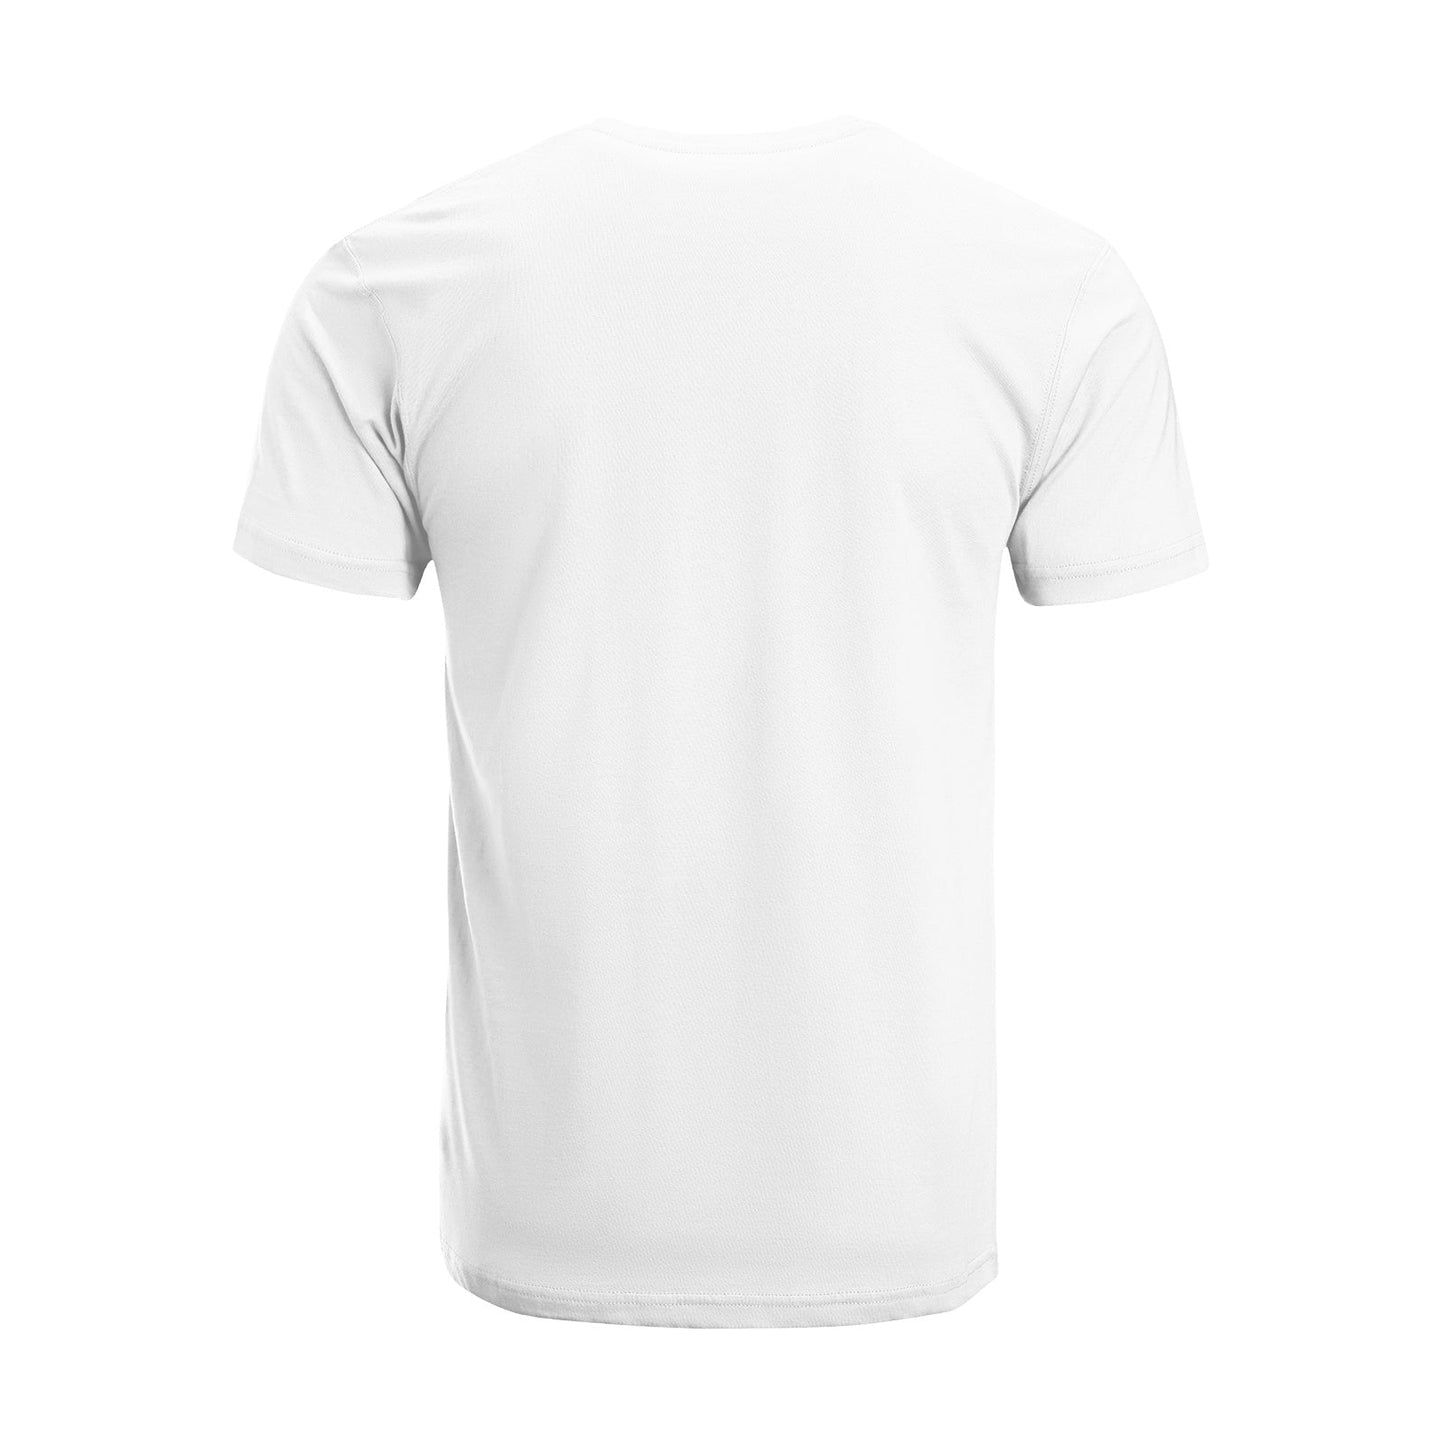 Unisex Short Sleeve Crew Neck Cotton Jersey T-Shirt MOM 08